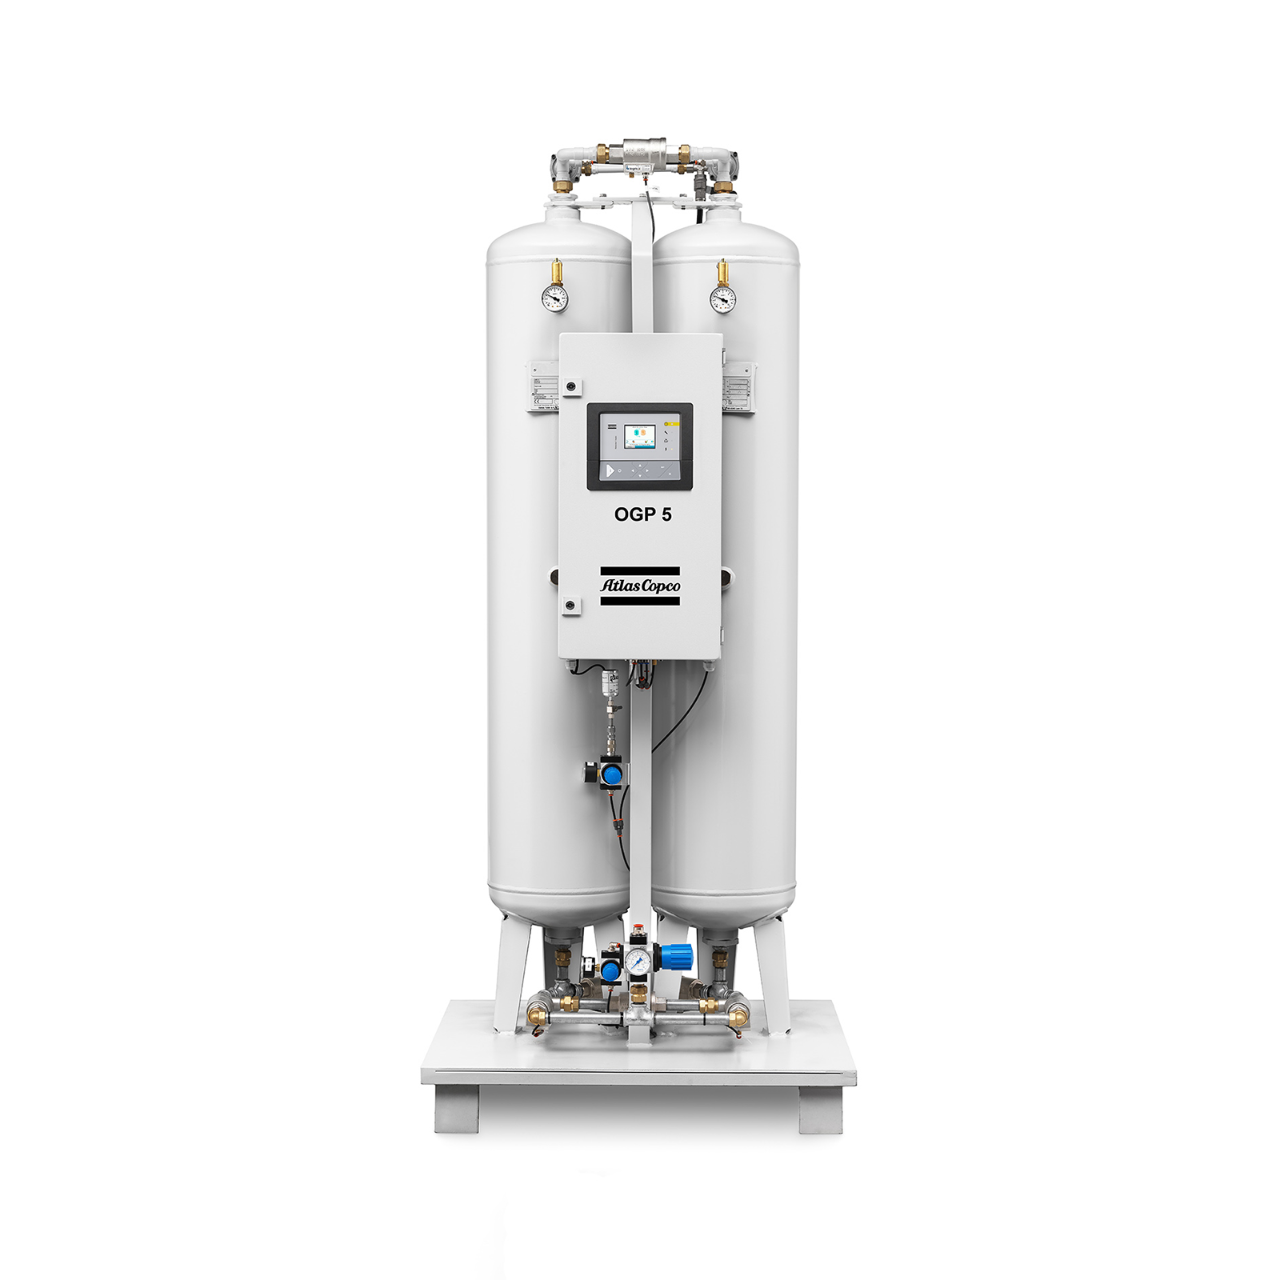 OGP 2-200 PSA oxygen generator